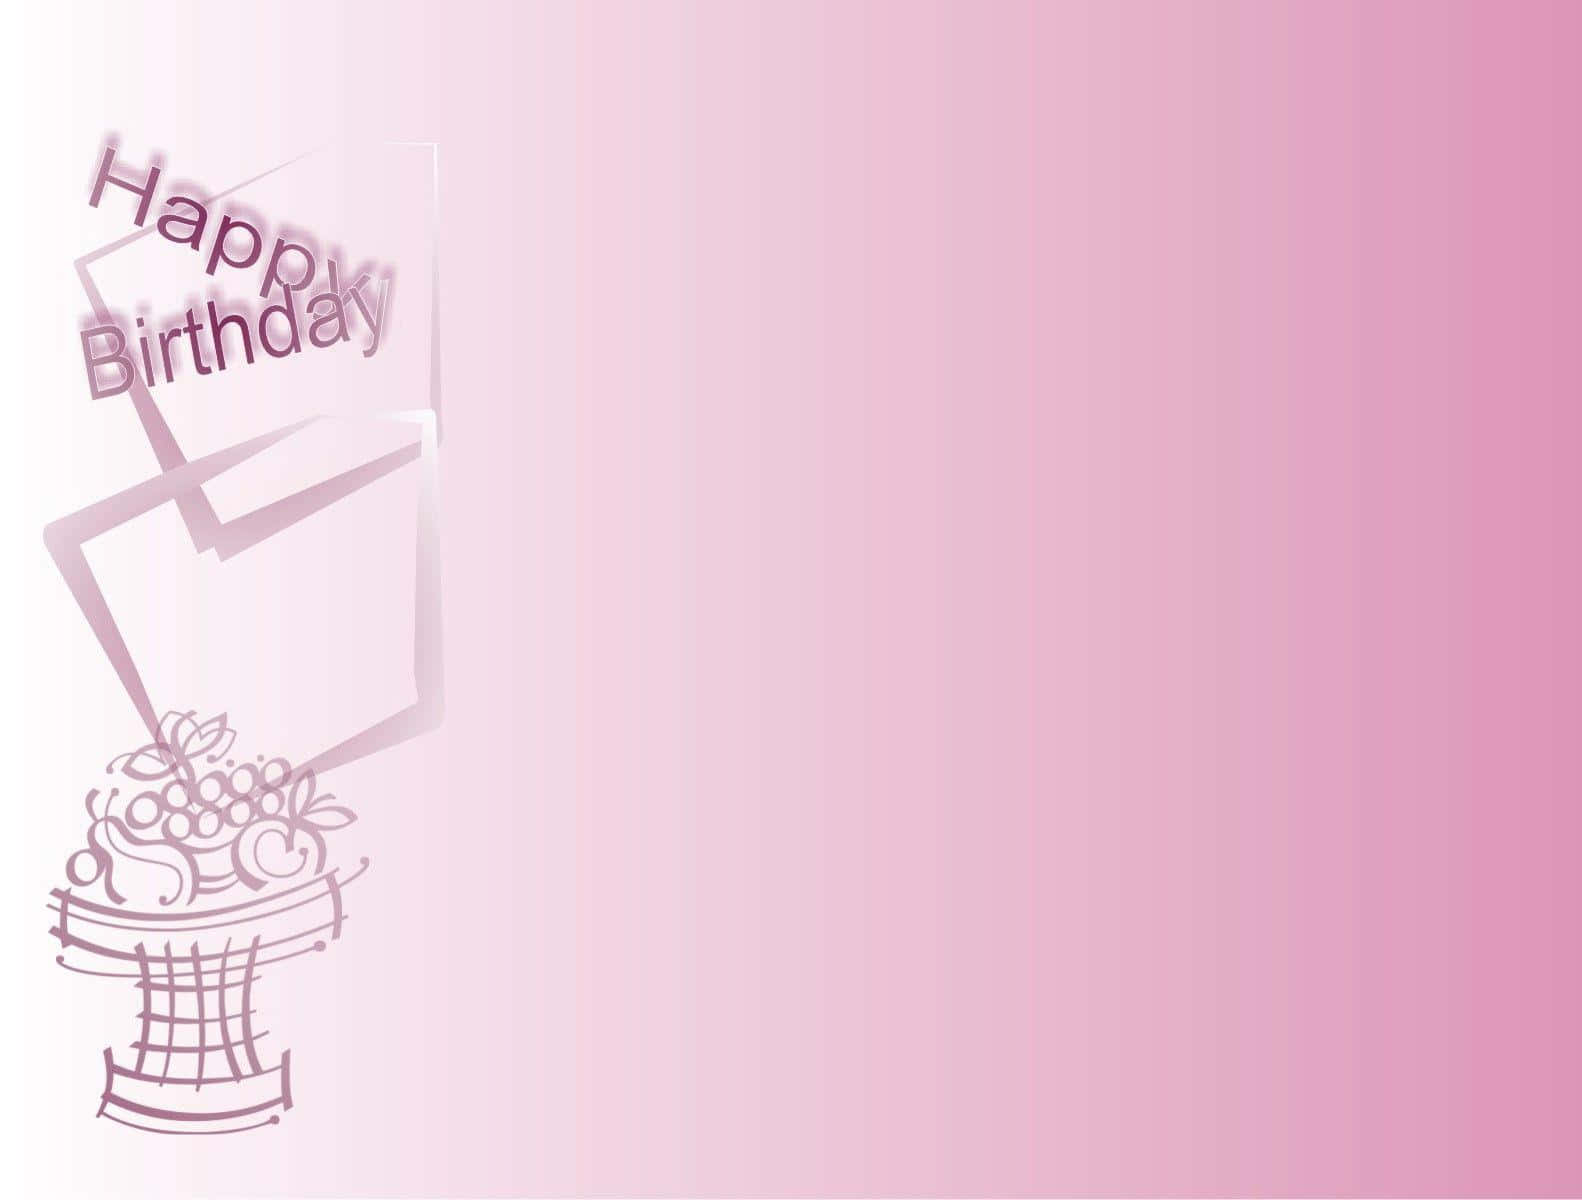 Birthday Wishes Cake Chocolate Heart Cake With Name | Chocolate cake with  name, Chocolate heart cakes, Cake name